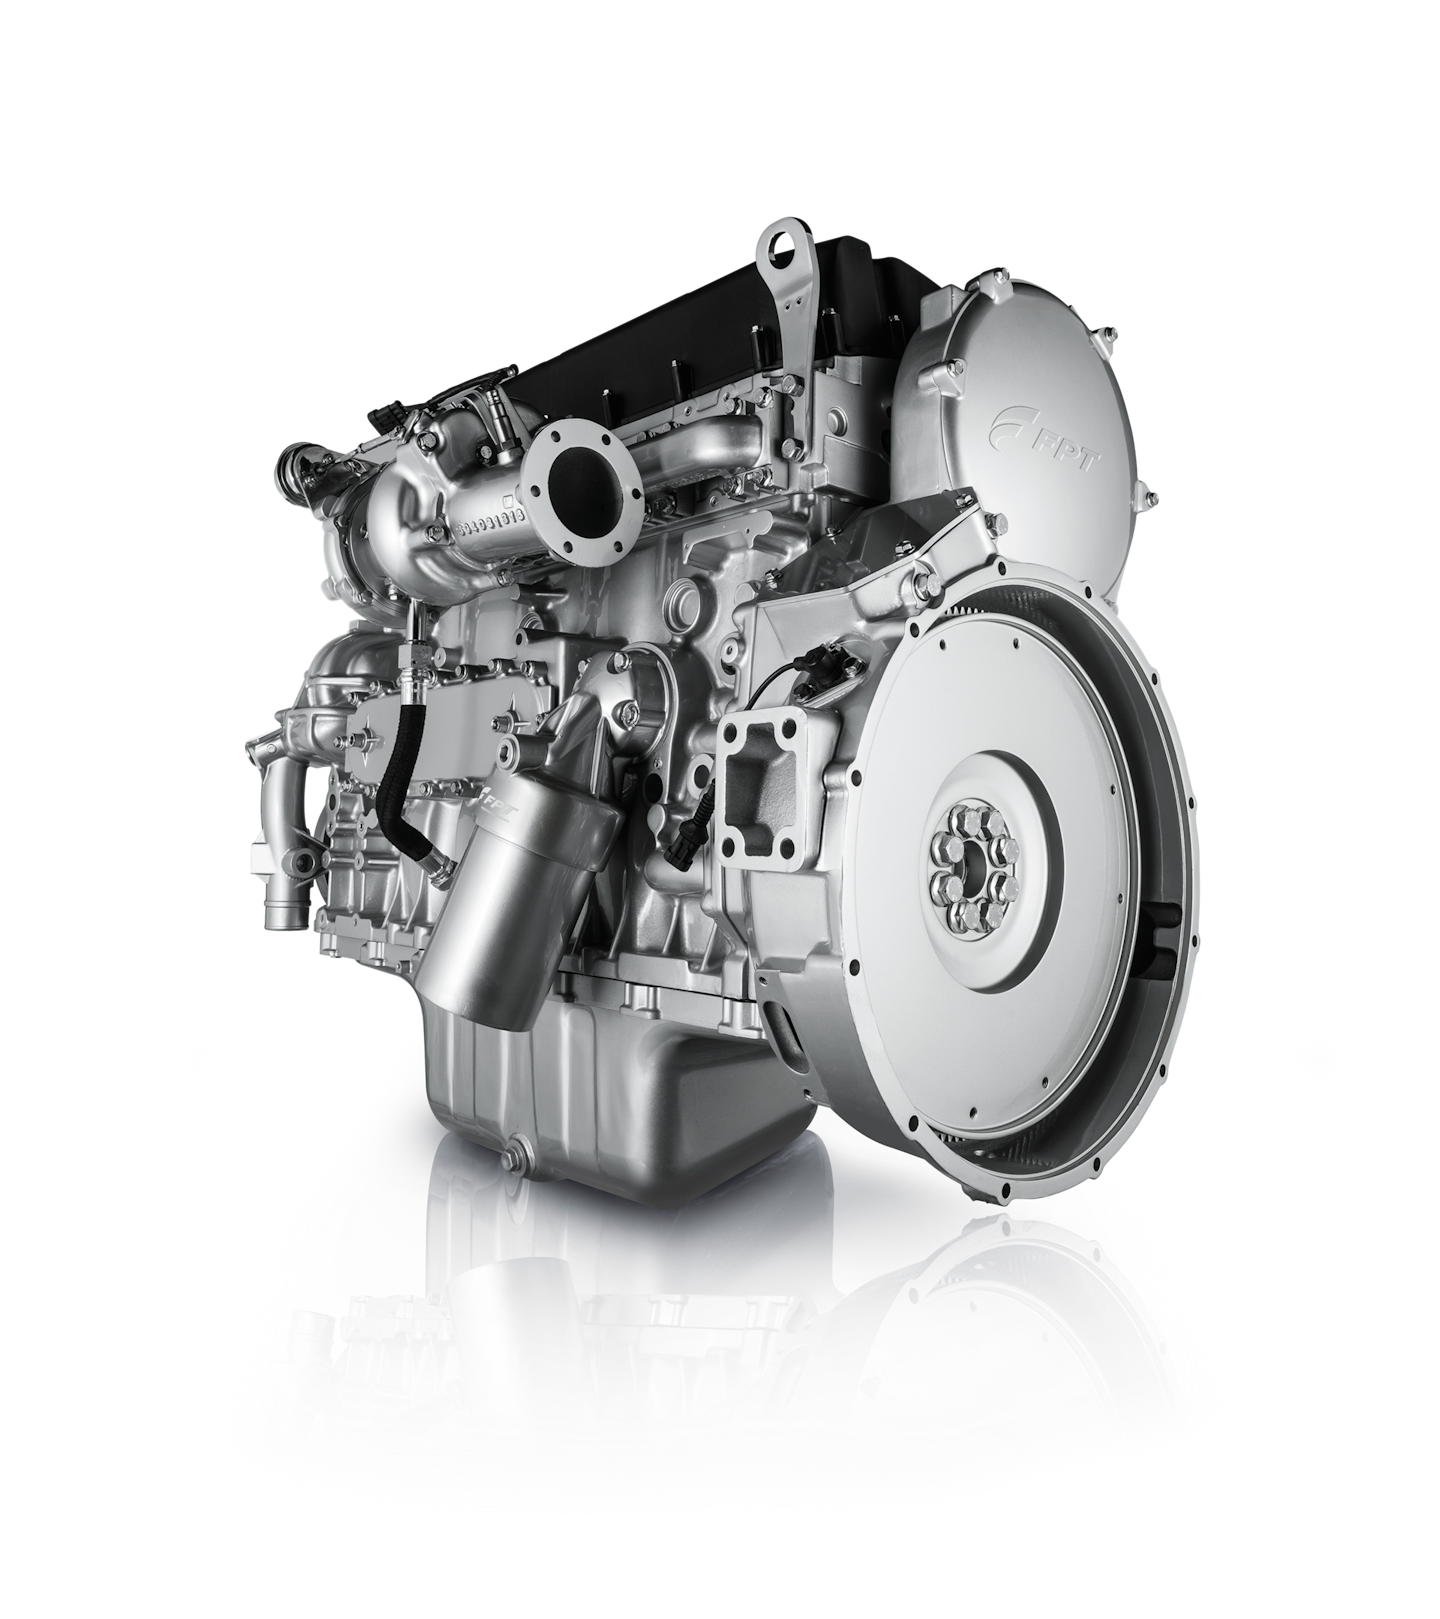 Lead engineering. Fiat Powertrain Technologies. FPT Powertrain Technologies. FPT двигатель 250 лс. ДВС cnh450.